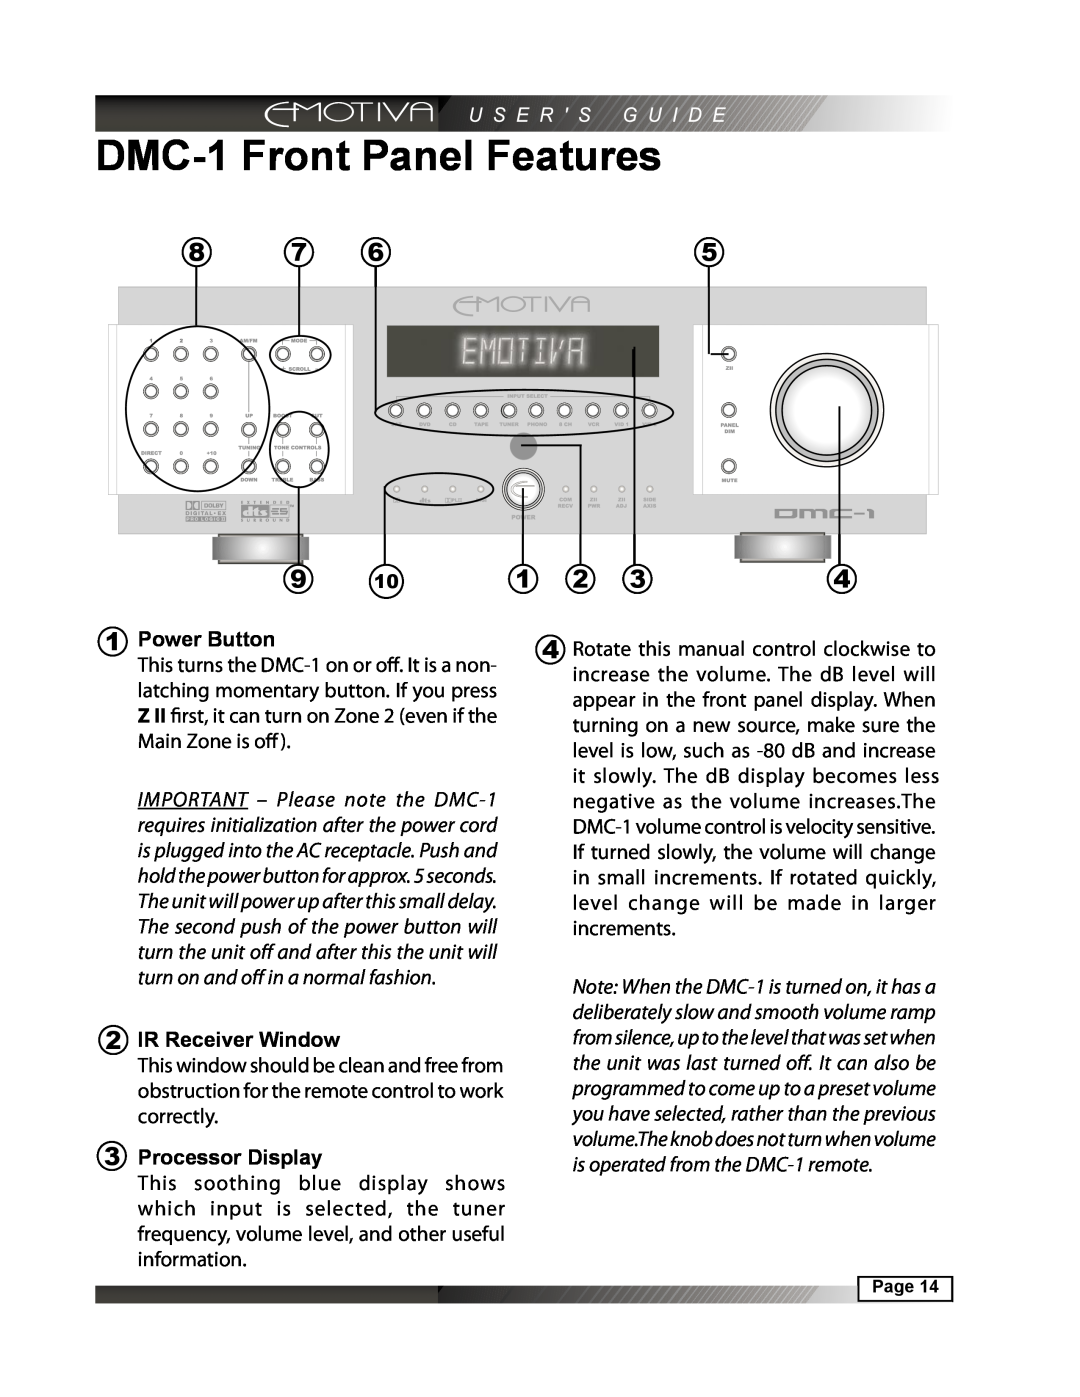 Emotiva manual DMC-1Front Panel Features, Power Button, IR Receiver Window, Processor Display 